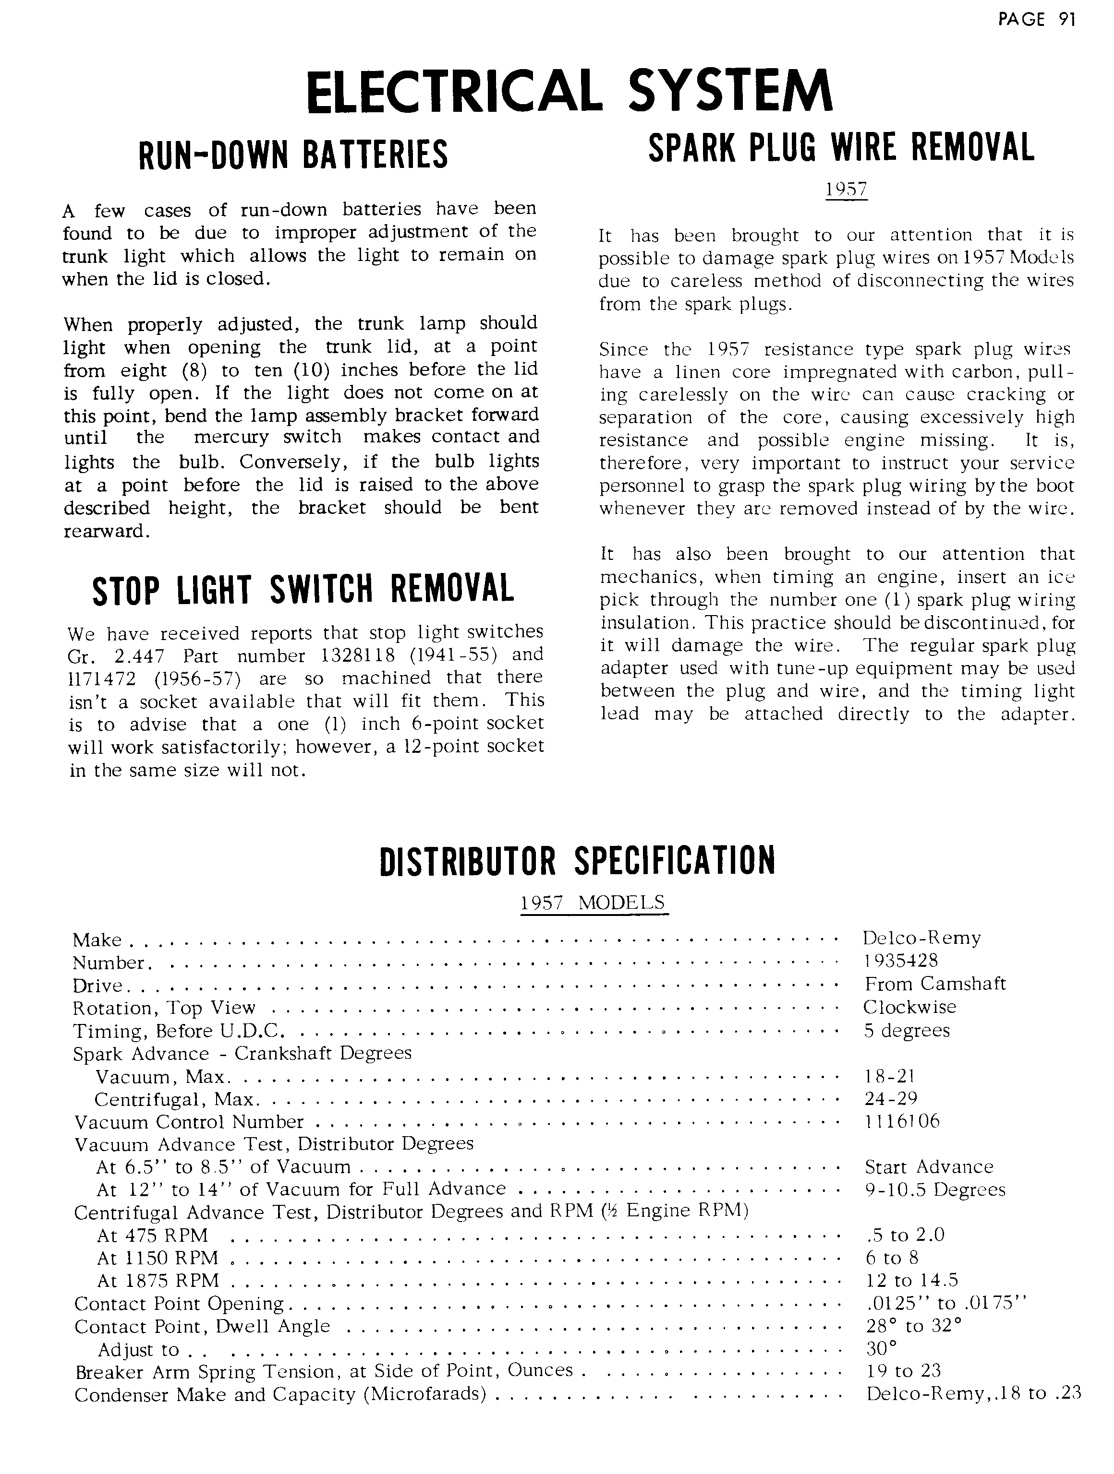 n_1957 Buick Product Service  Bulletins-095-095.jpg